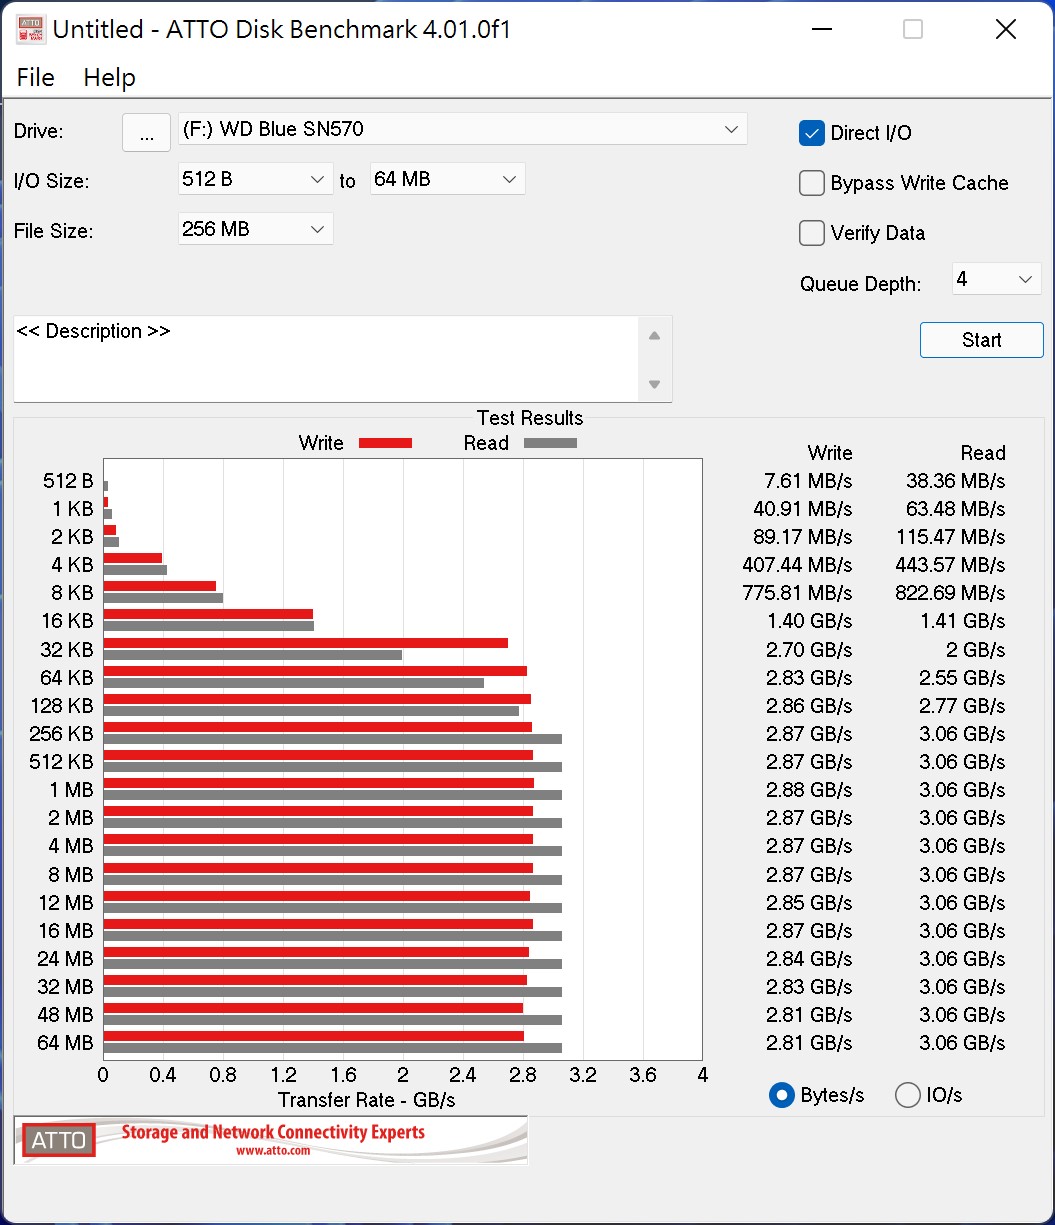 在ATTO Disk Benchmark，最佳讀寫成績分別為3.06GB/s、2.87GB/s。